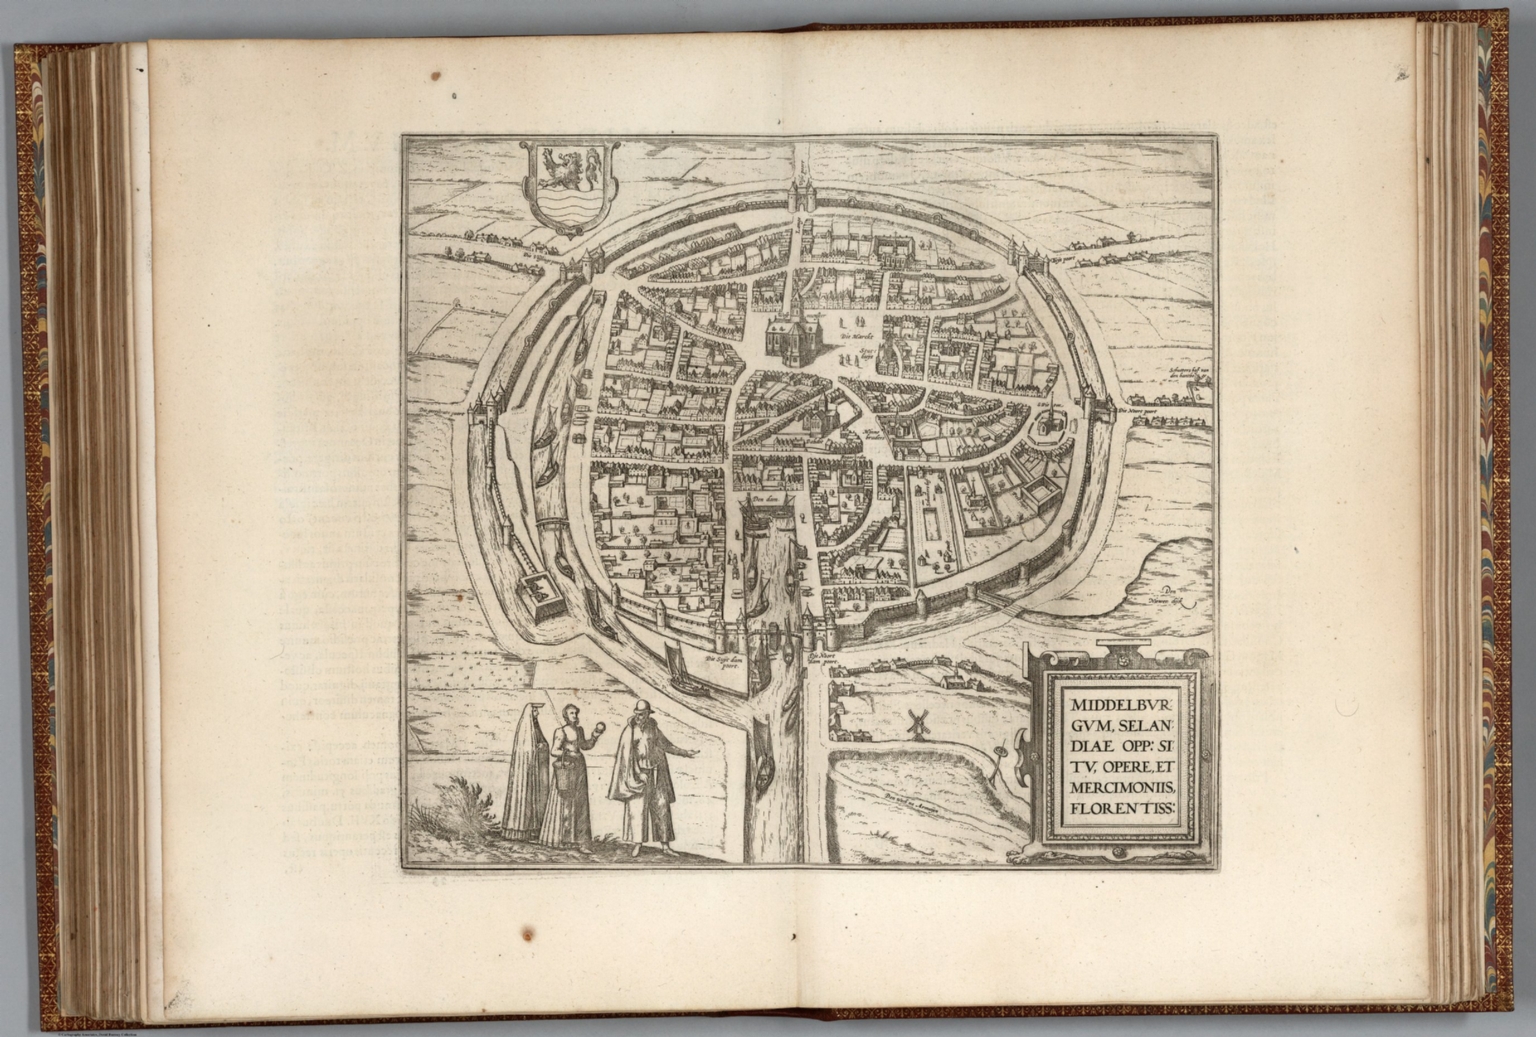 Vol II (28) Middelburgum (Middelburg) - David Rumsey Historical Map ...